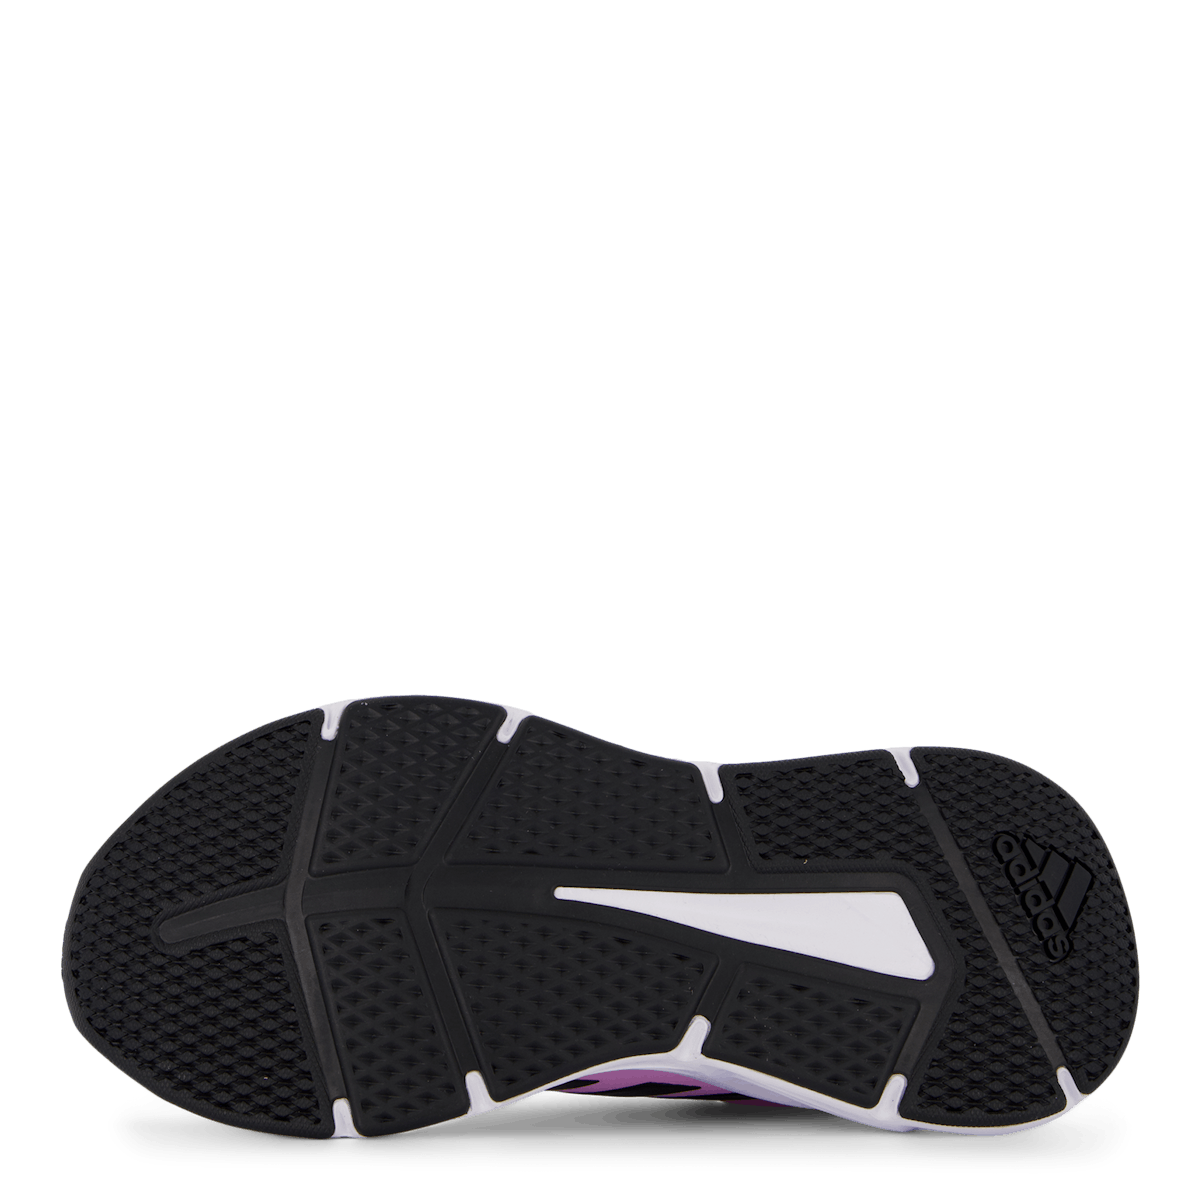 Galaxy 6 Shoes Blilil / Core Black / Segrsp